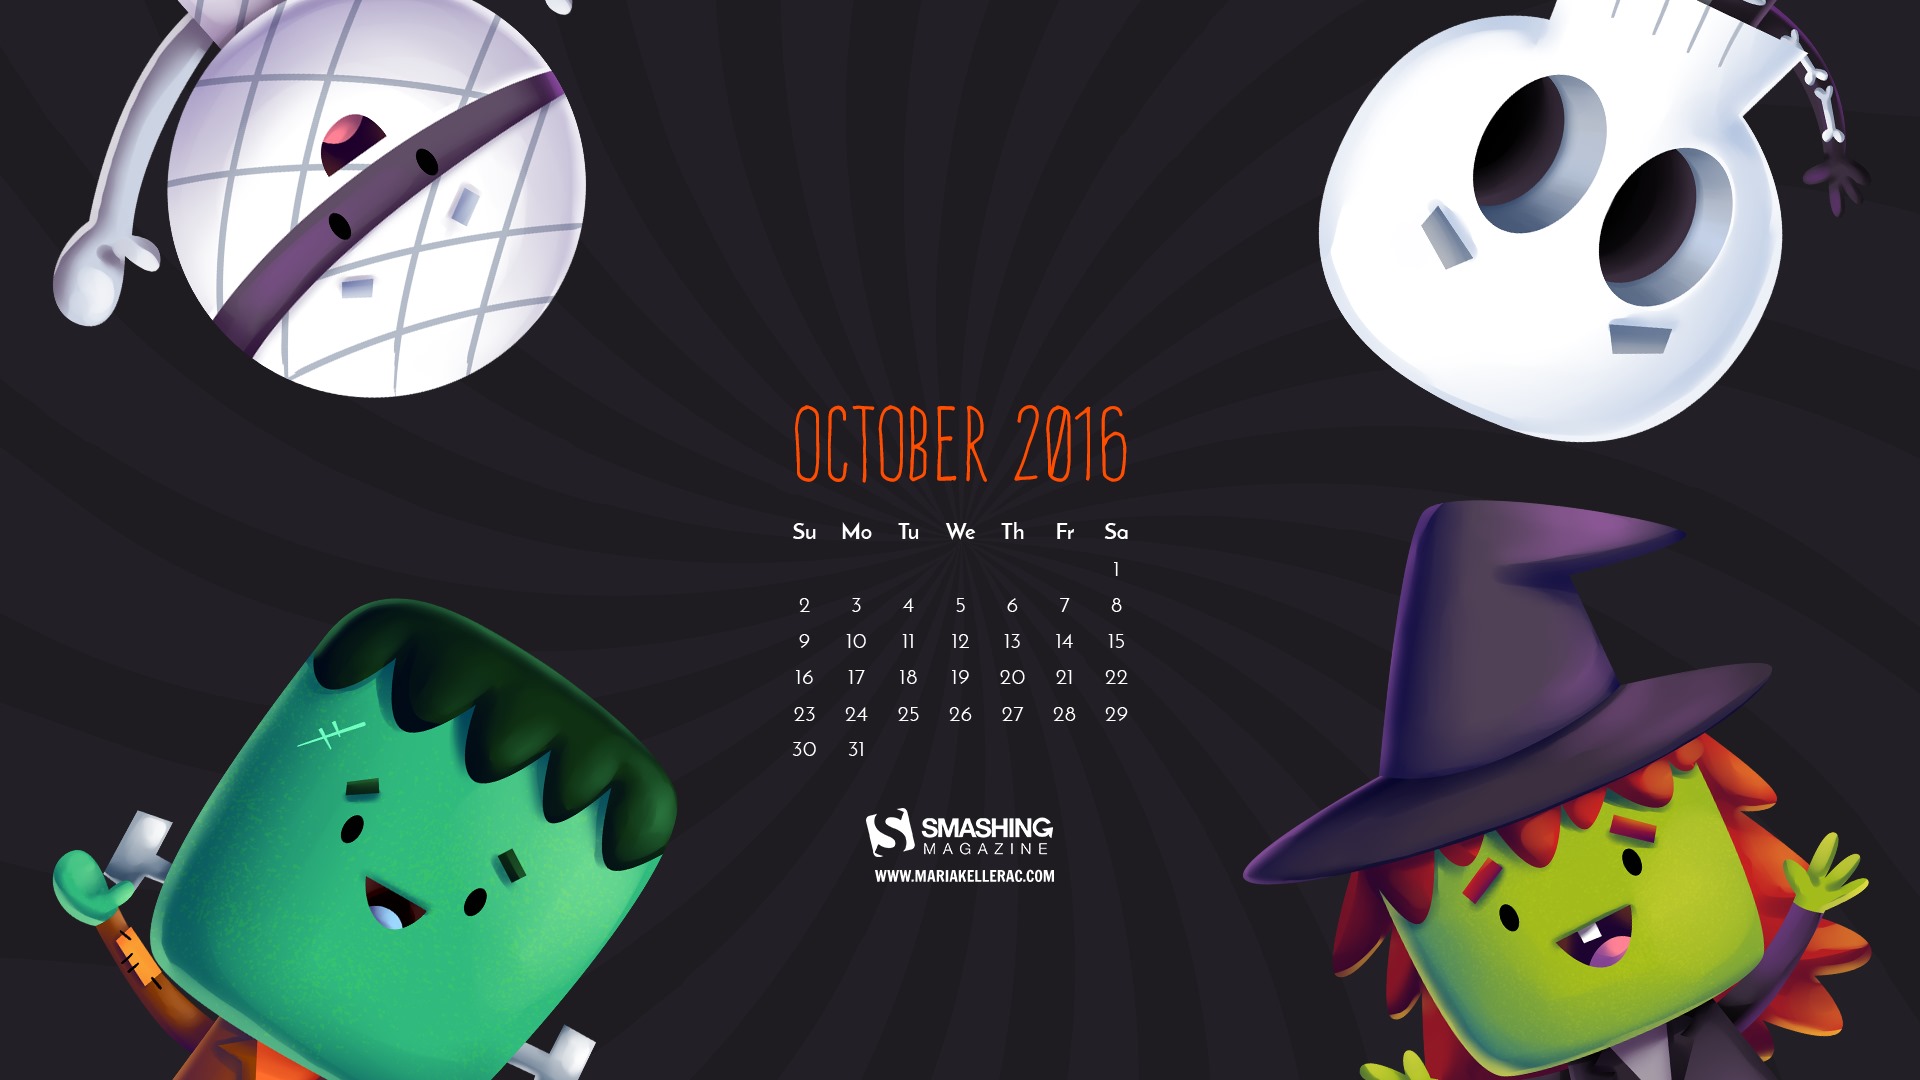 October 2016 calendar wallpaper (2) #6 - 1920x1080